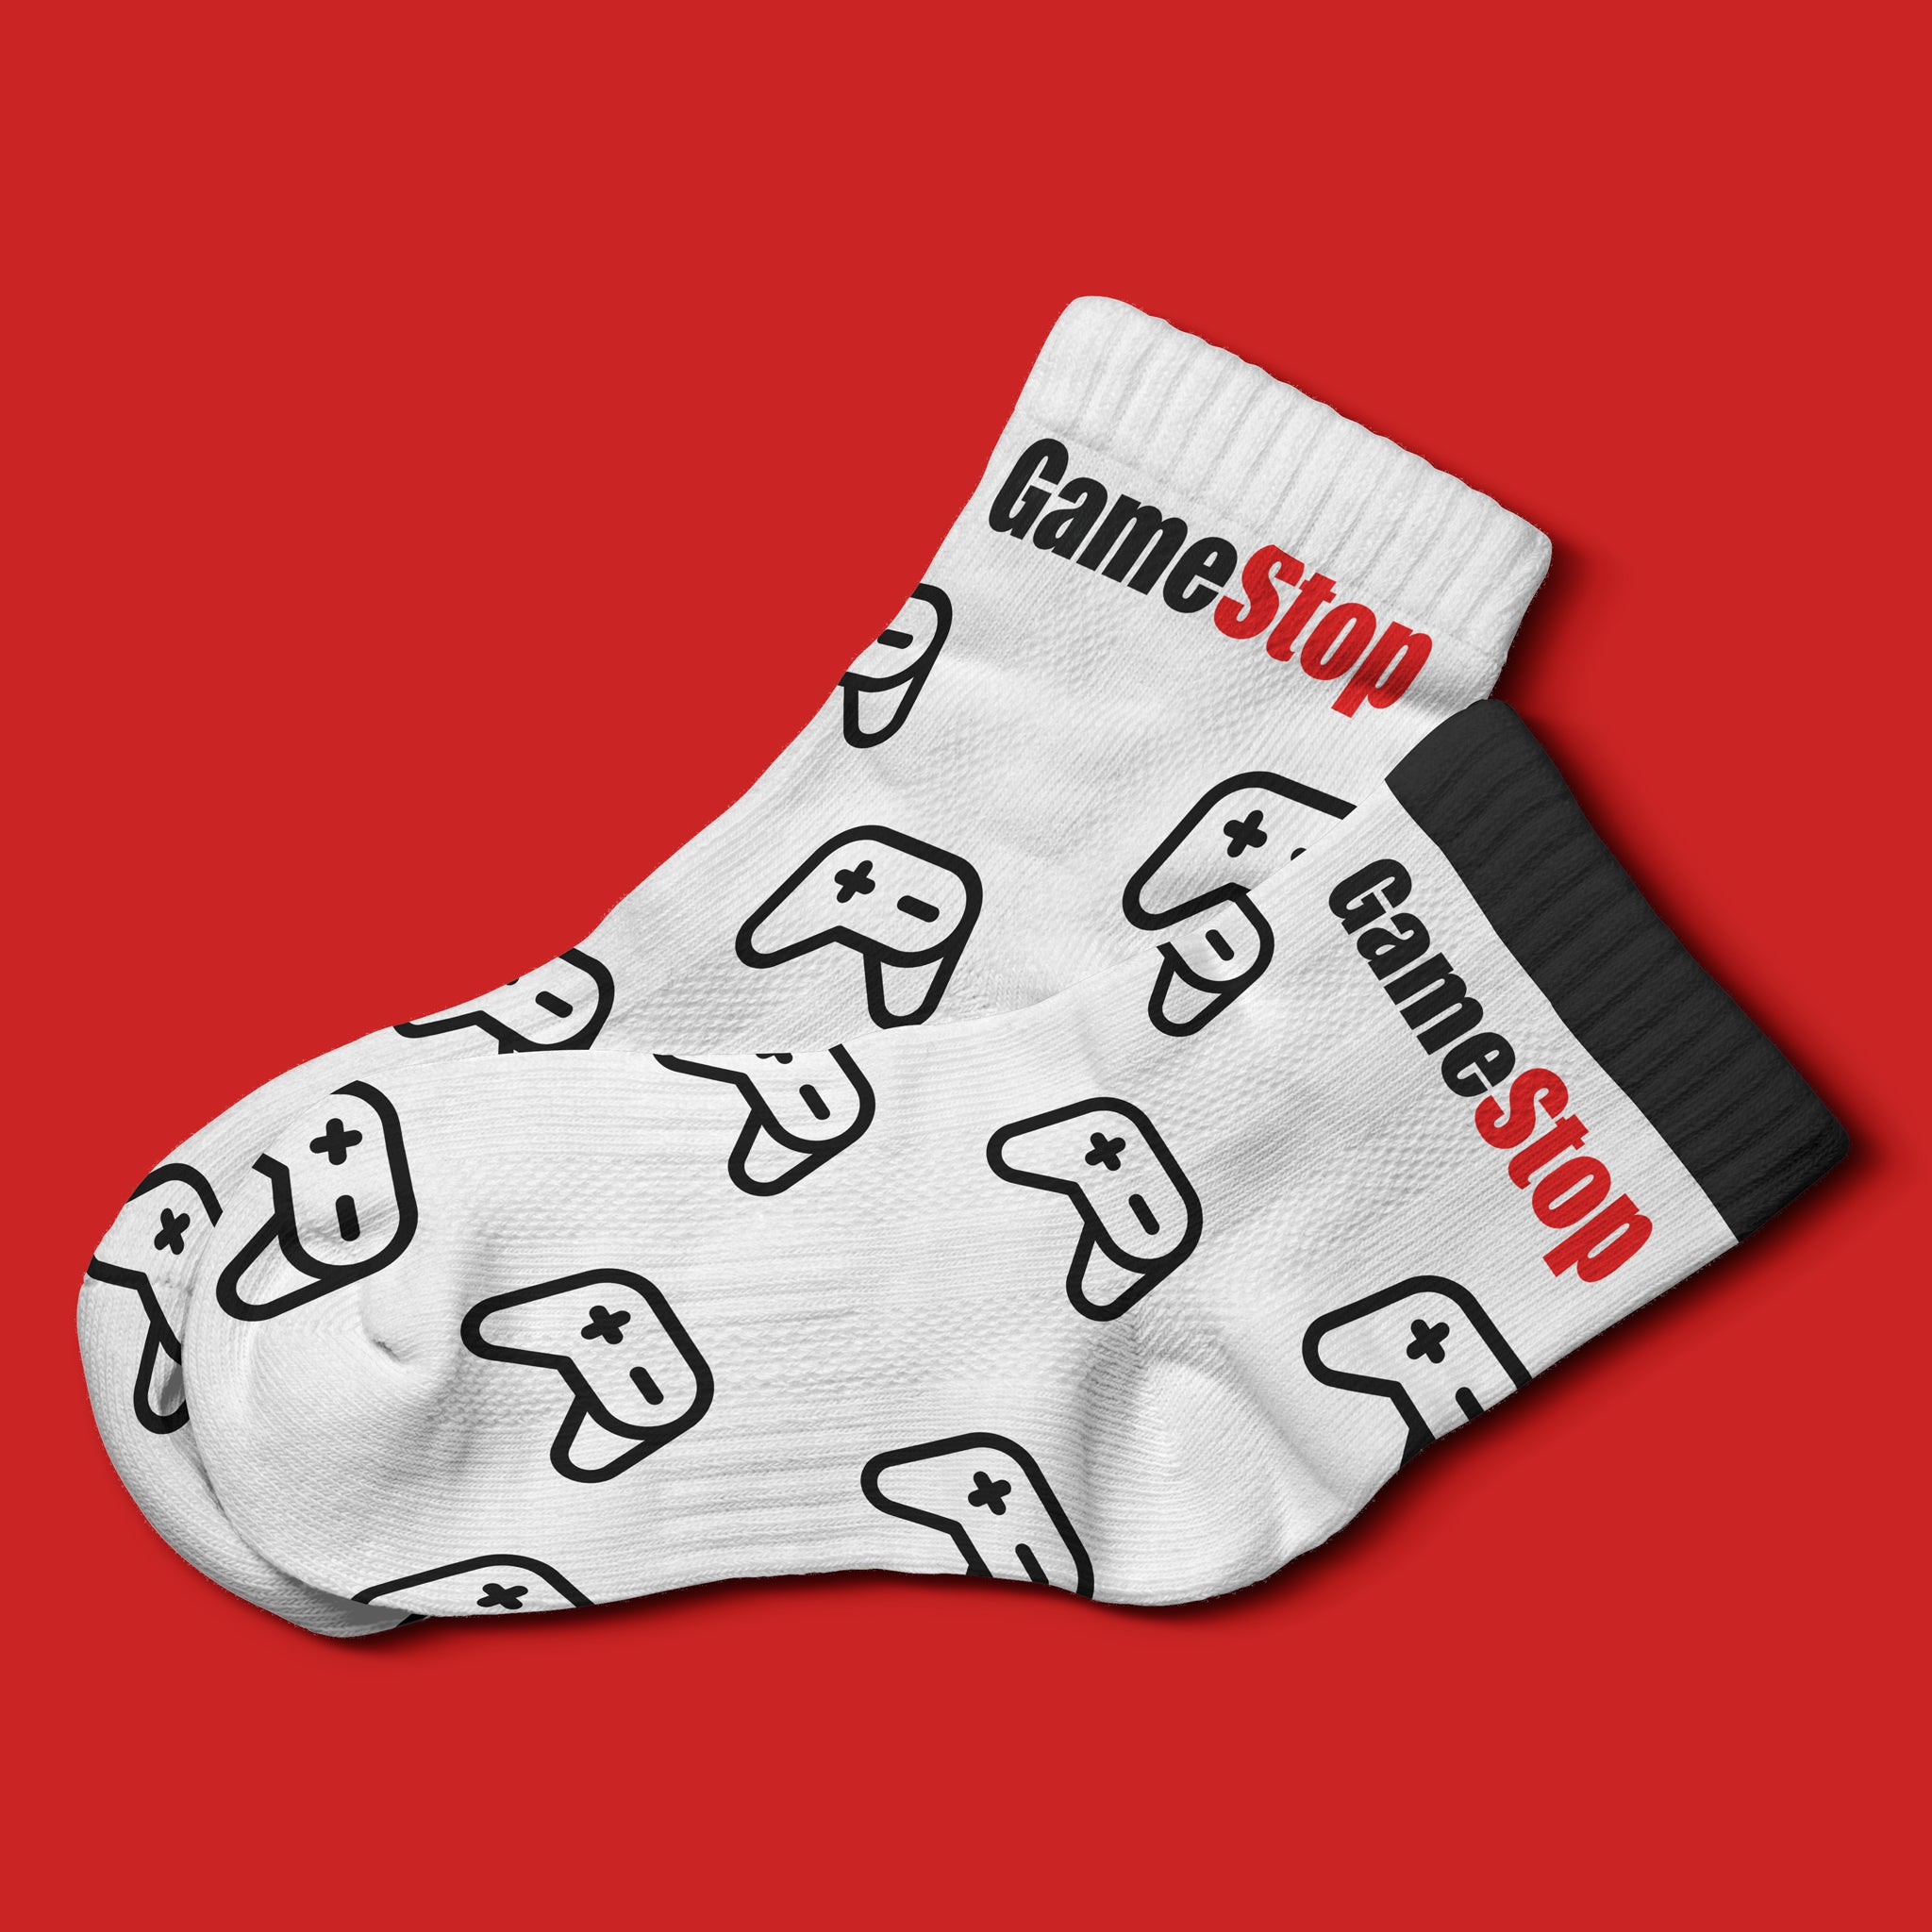 Custom Kids Socks, $8 - $10 per pair